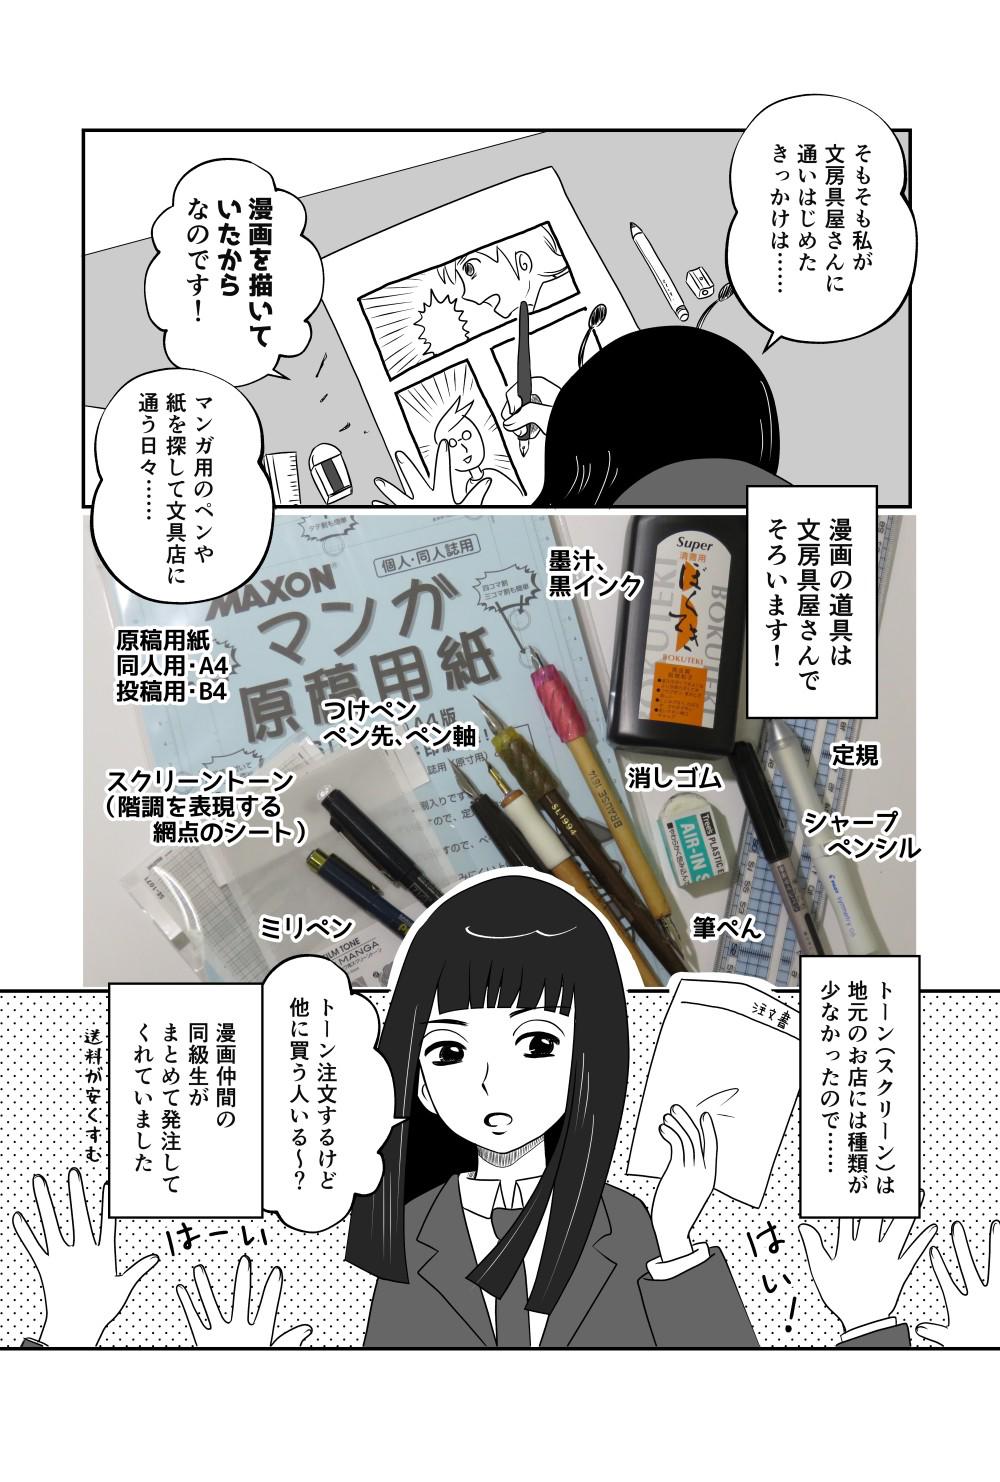 30_manga01_1000.jpg